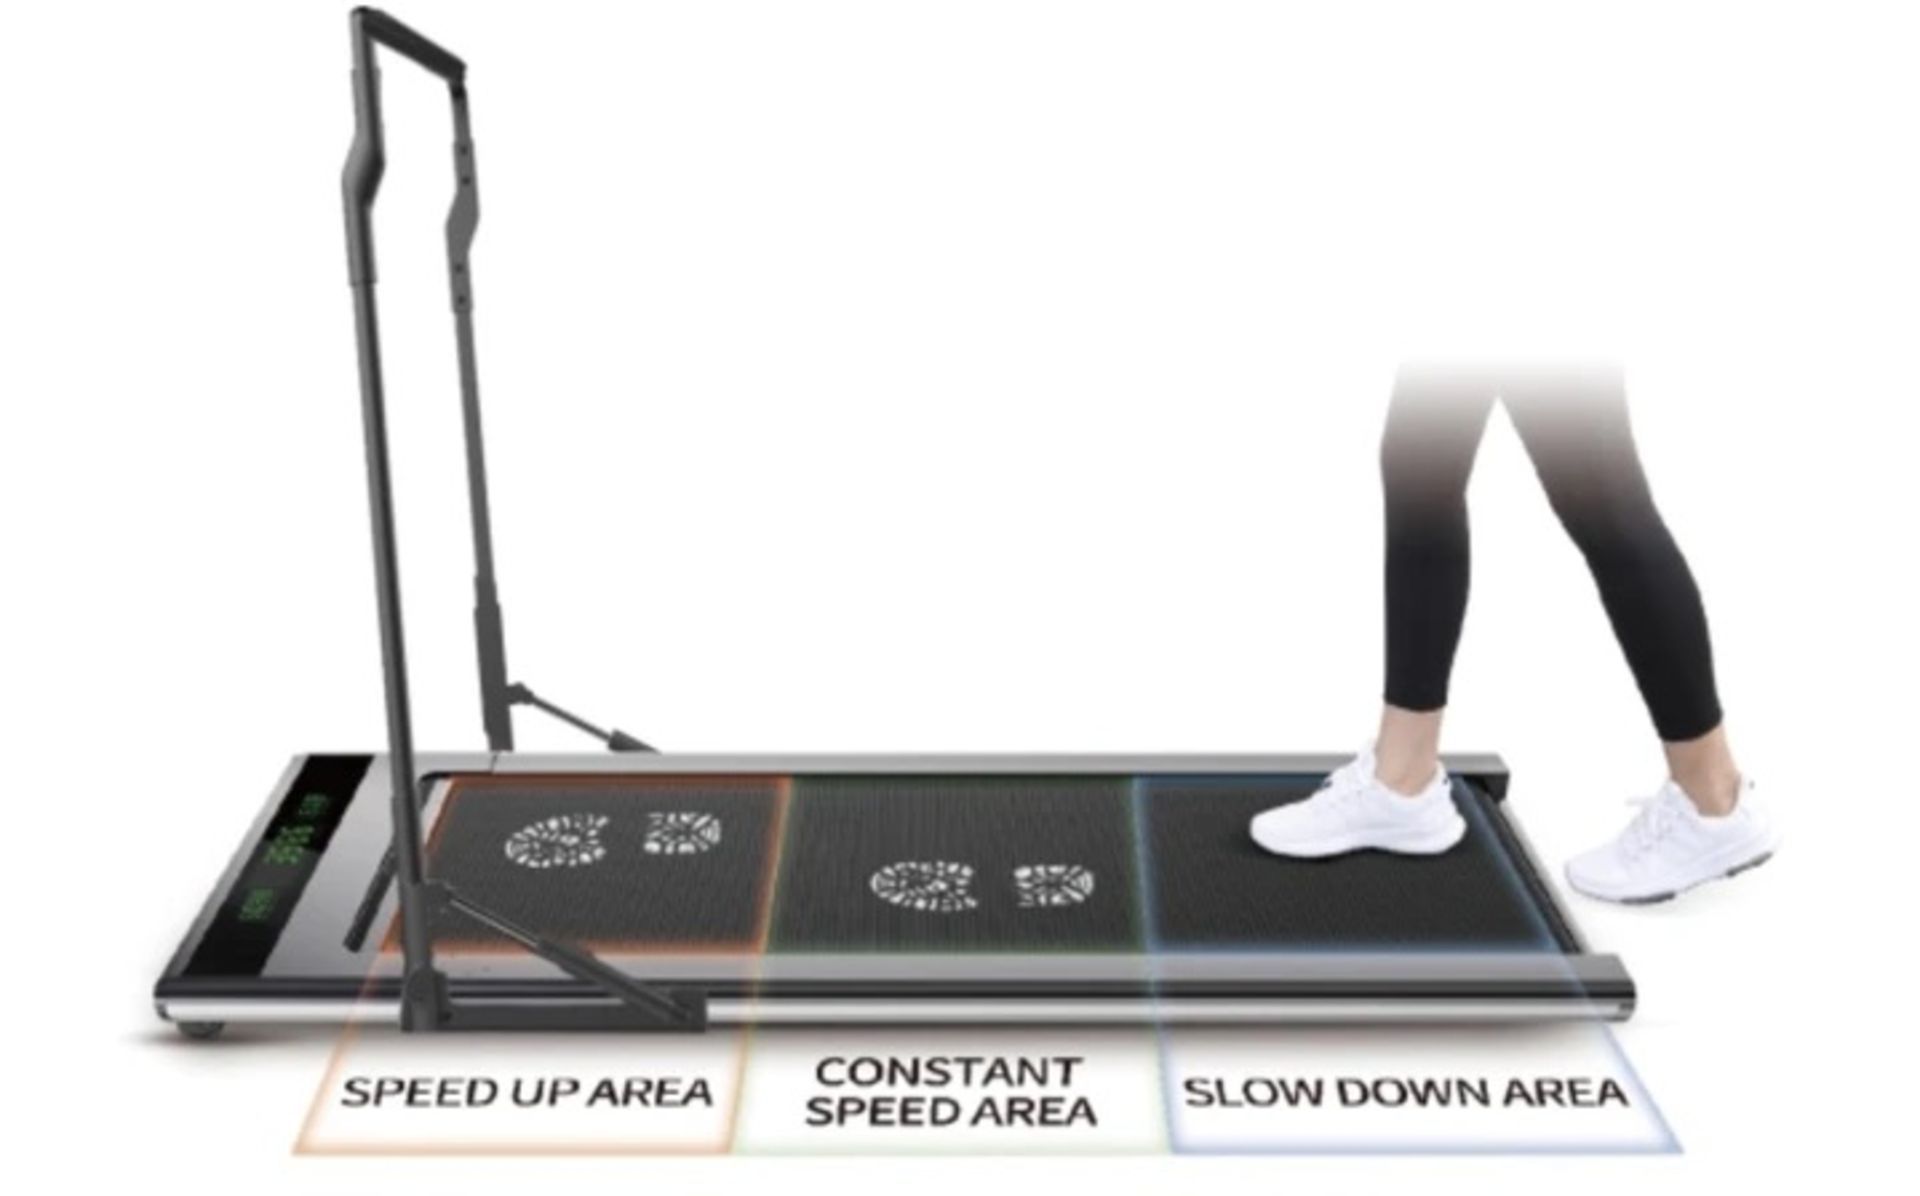 1 x Slim Tread Ultra Thin Smart Treadmill Running / Walking Machine - Lightweight With Folding - Image 8 of 8